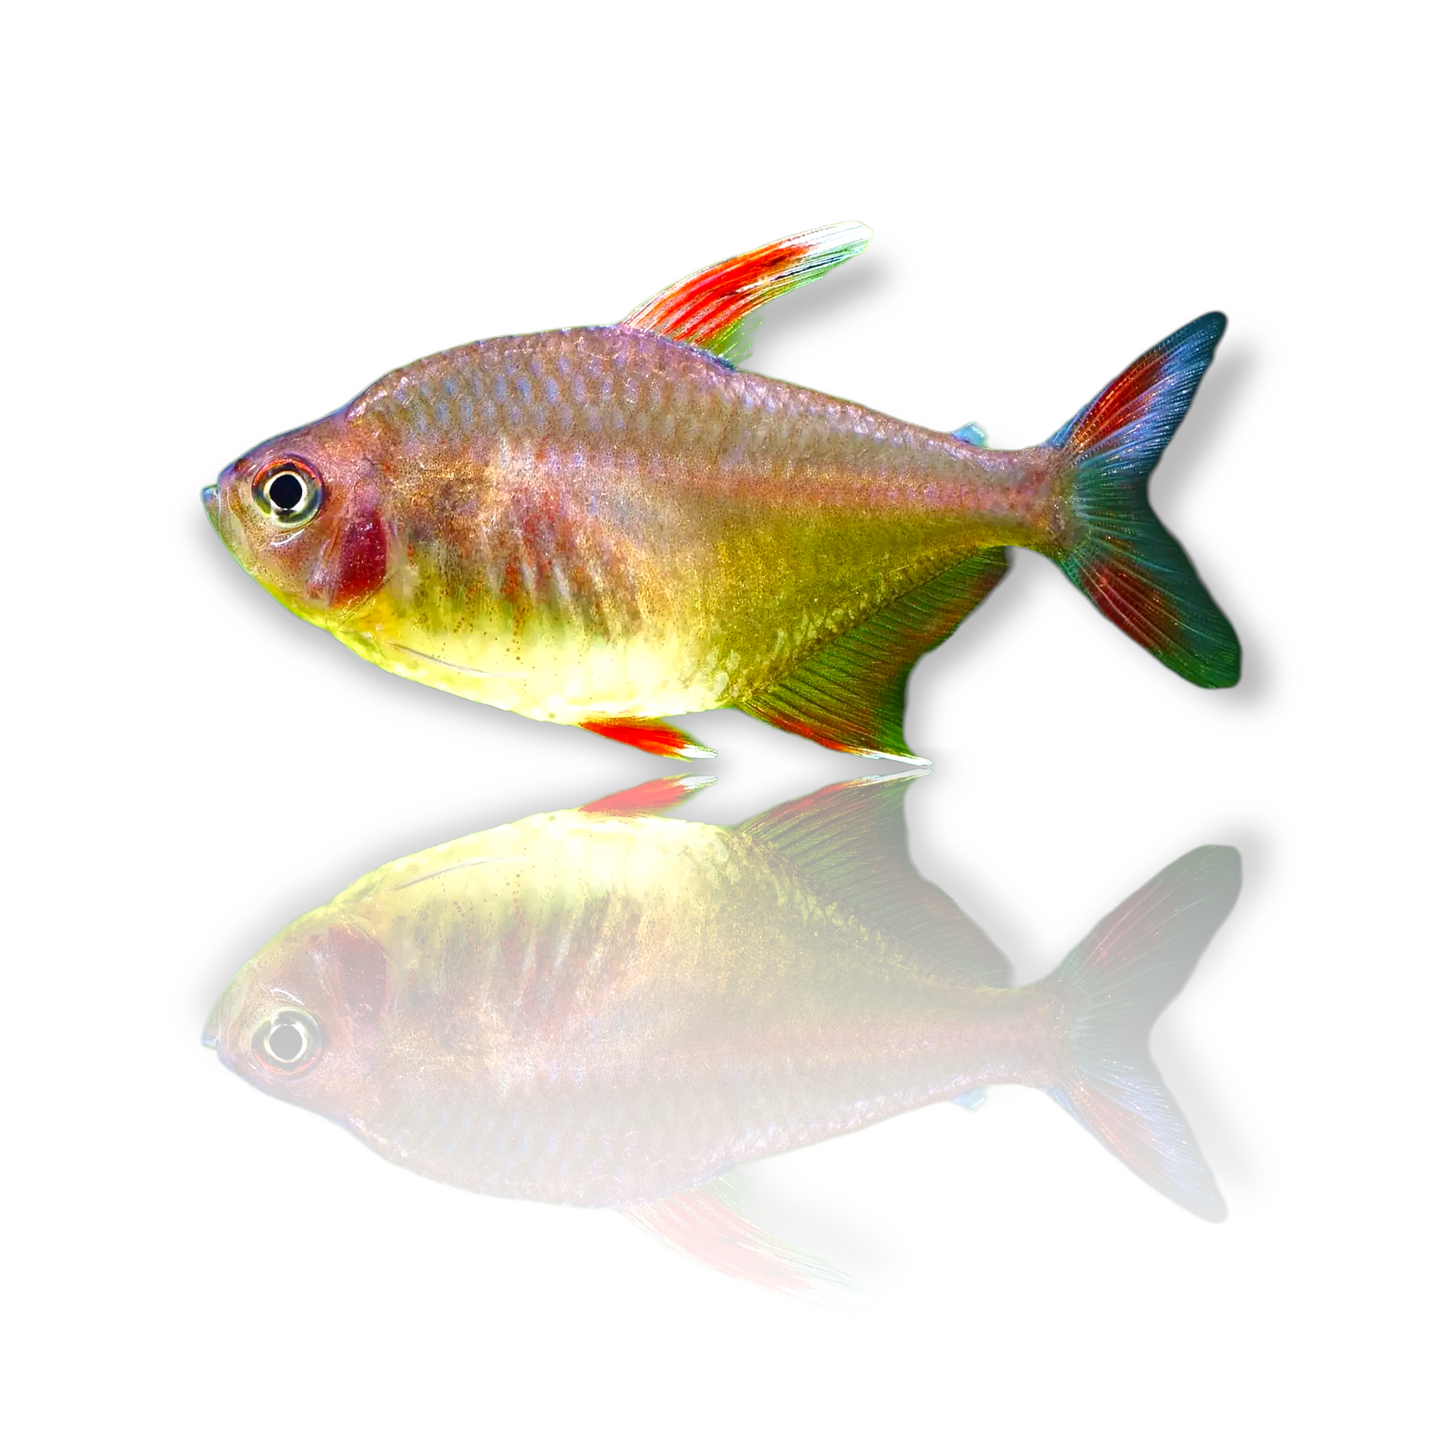 Rosy Tetra (Hyphessobrycon Rosaceus) Live Nano Freshwater Aquarium Fish